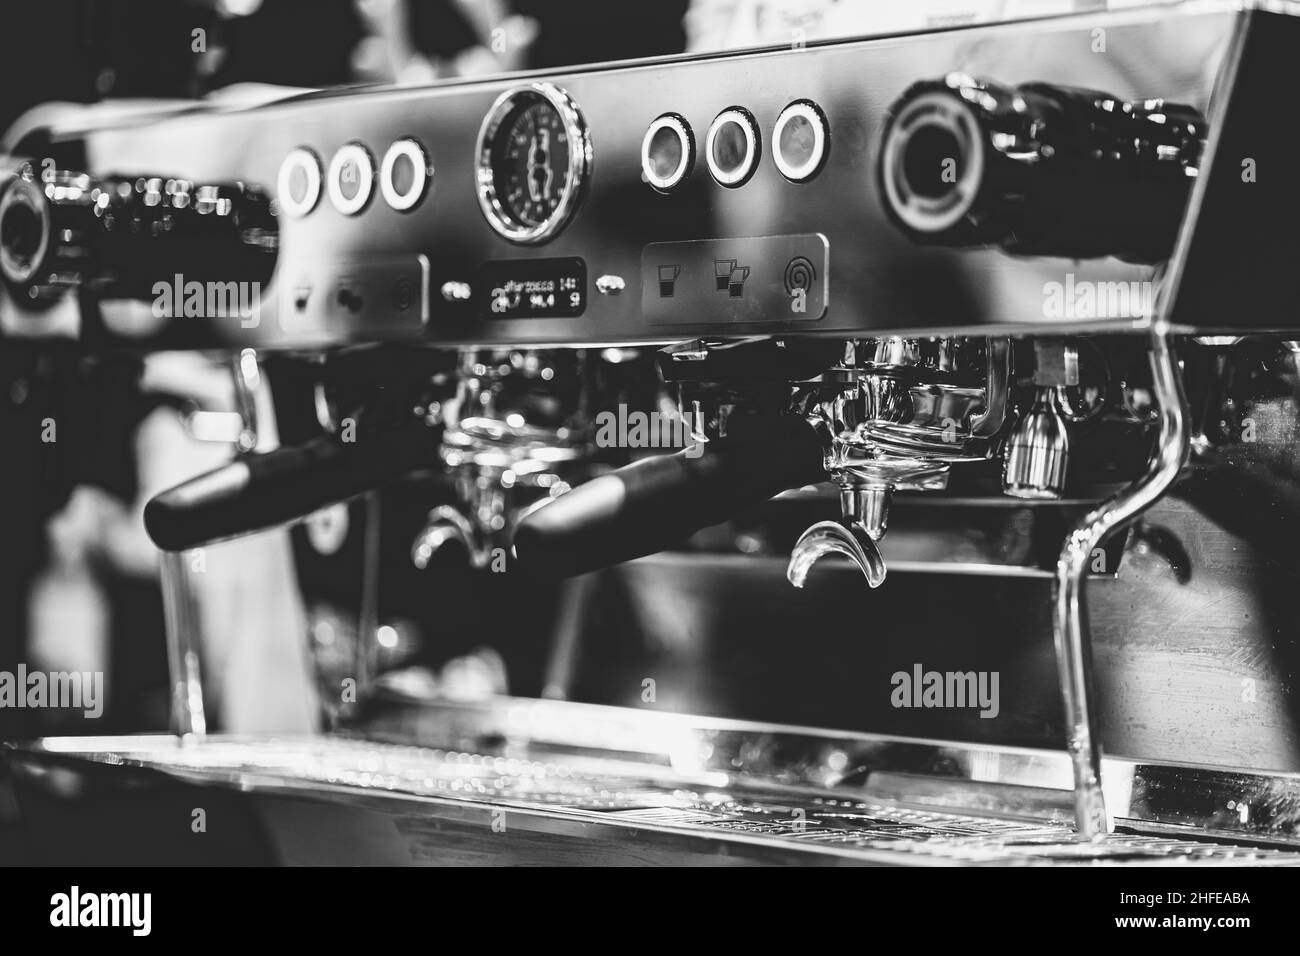 https://c8.alamy.com/comp/2HFEABA/italian-espresso-machine-black-and-white-vintage-color-style-2HFEABA.jpg